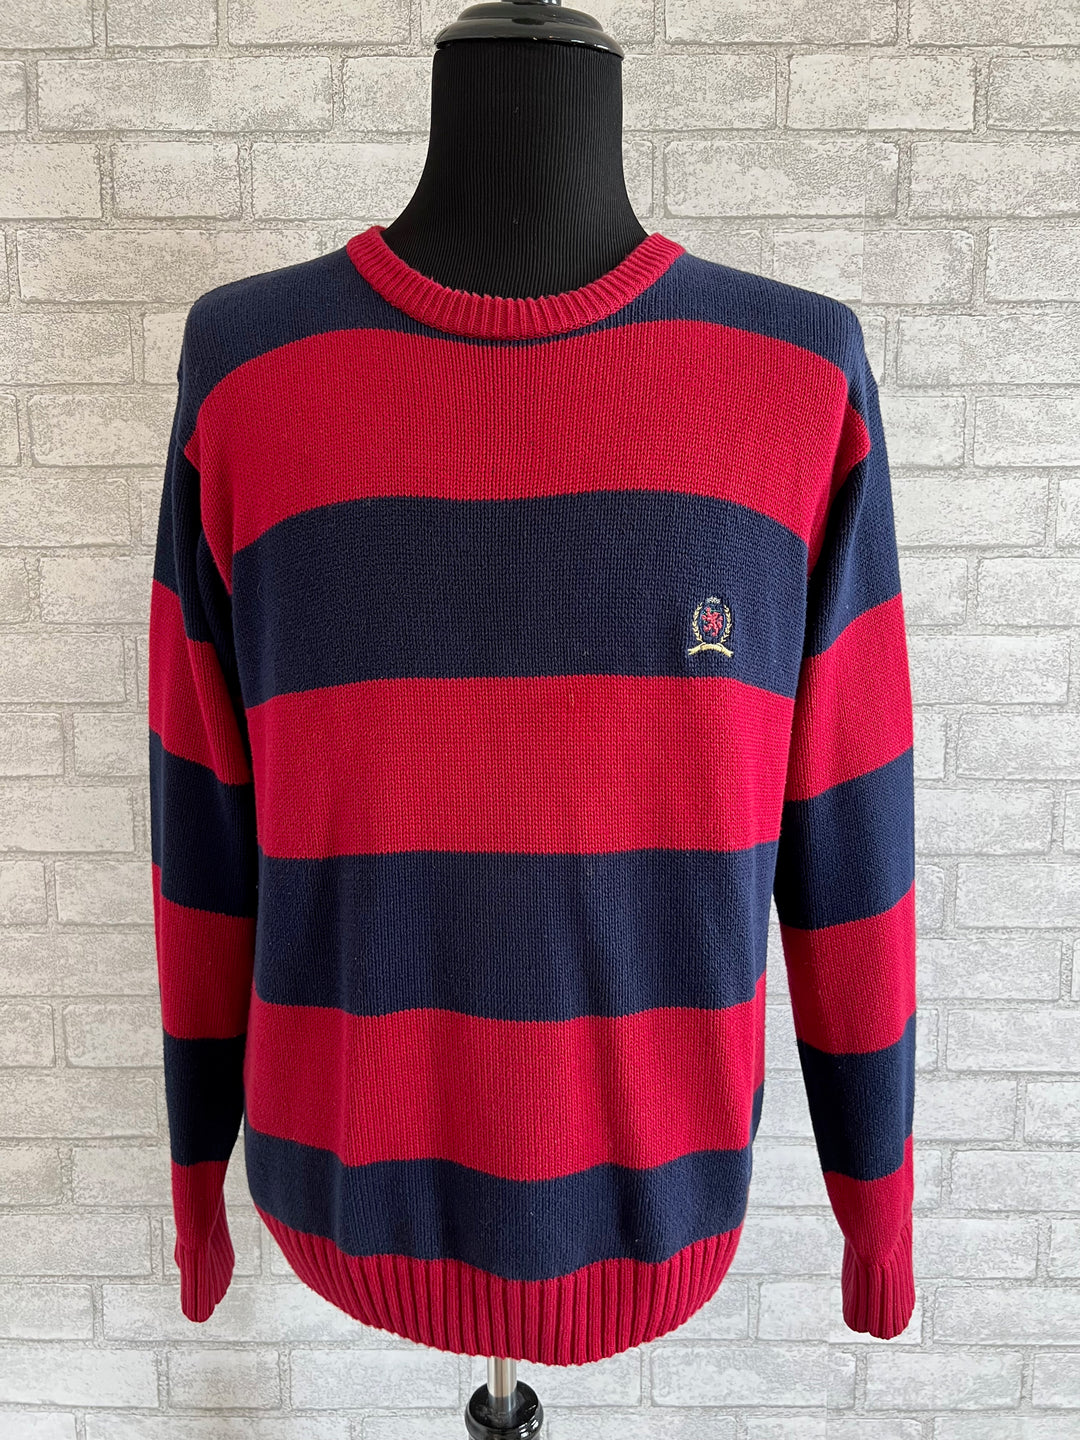 Vintage 90's Tommy Hilfiger Crest sweater.  Red and blue stripes